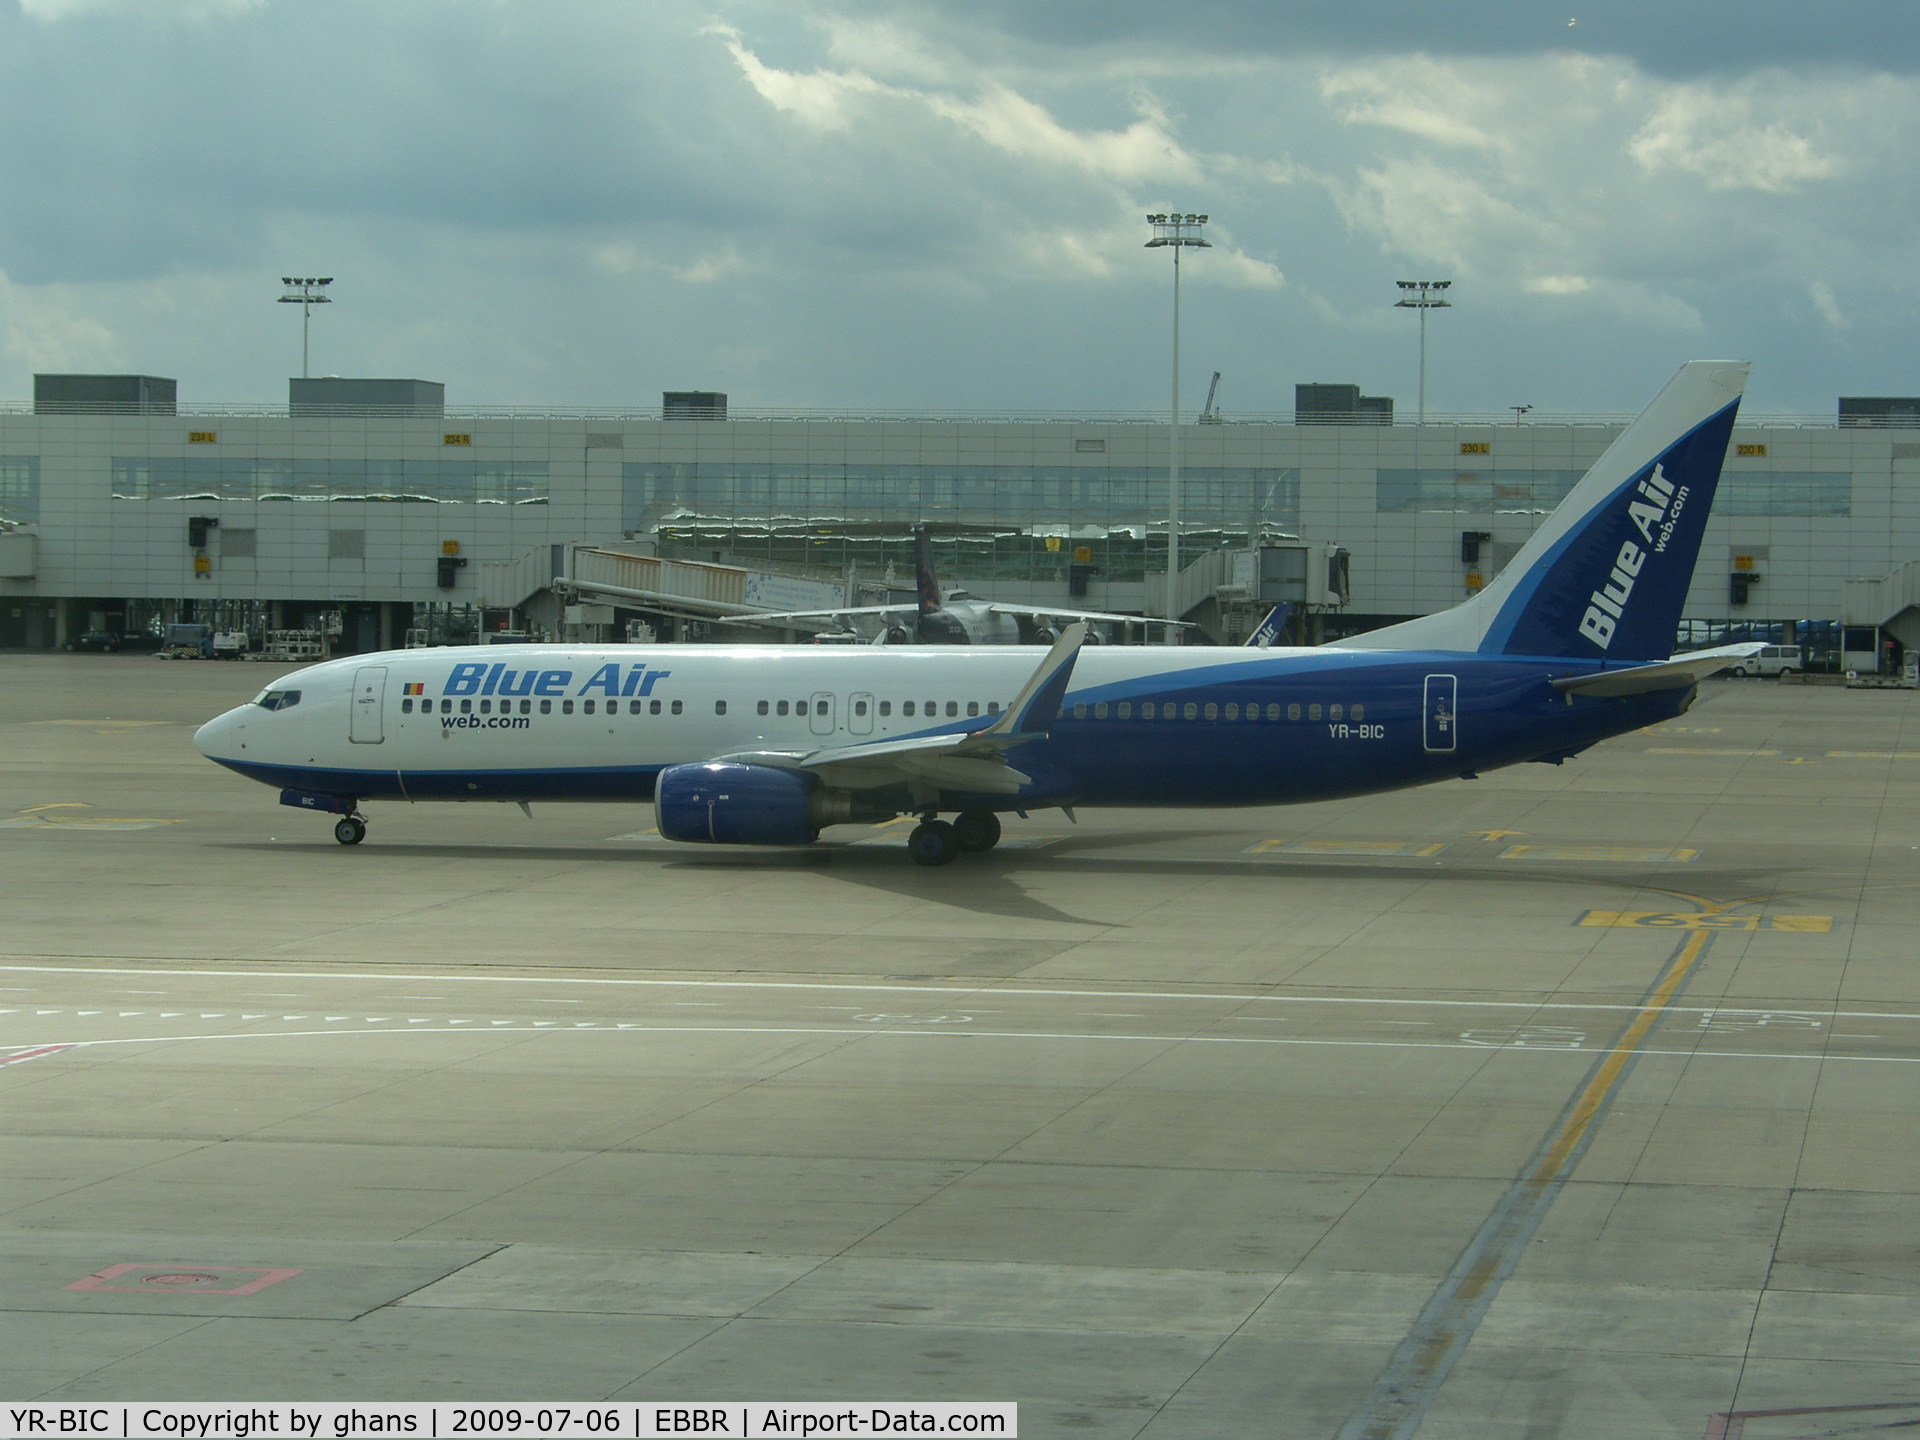 YR-BIC, 2004 Boeing 737-8BK C/N 33019, A different colorscheme for this Blue Air